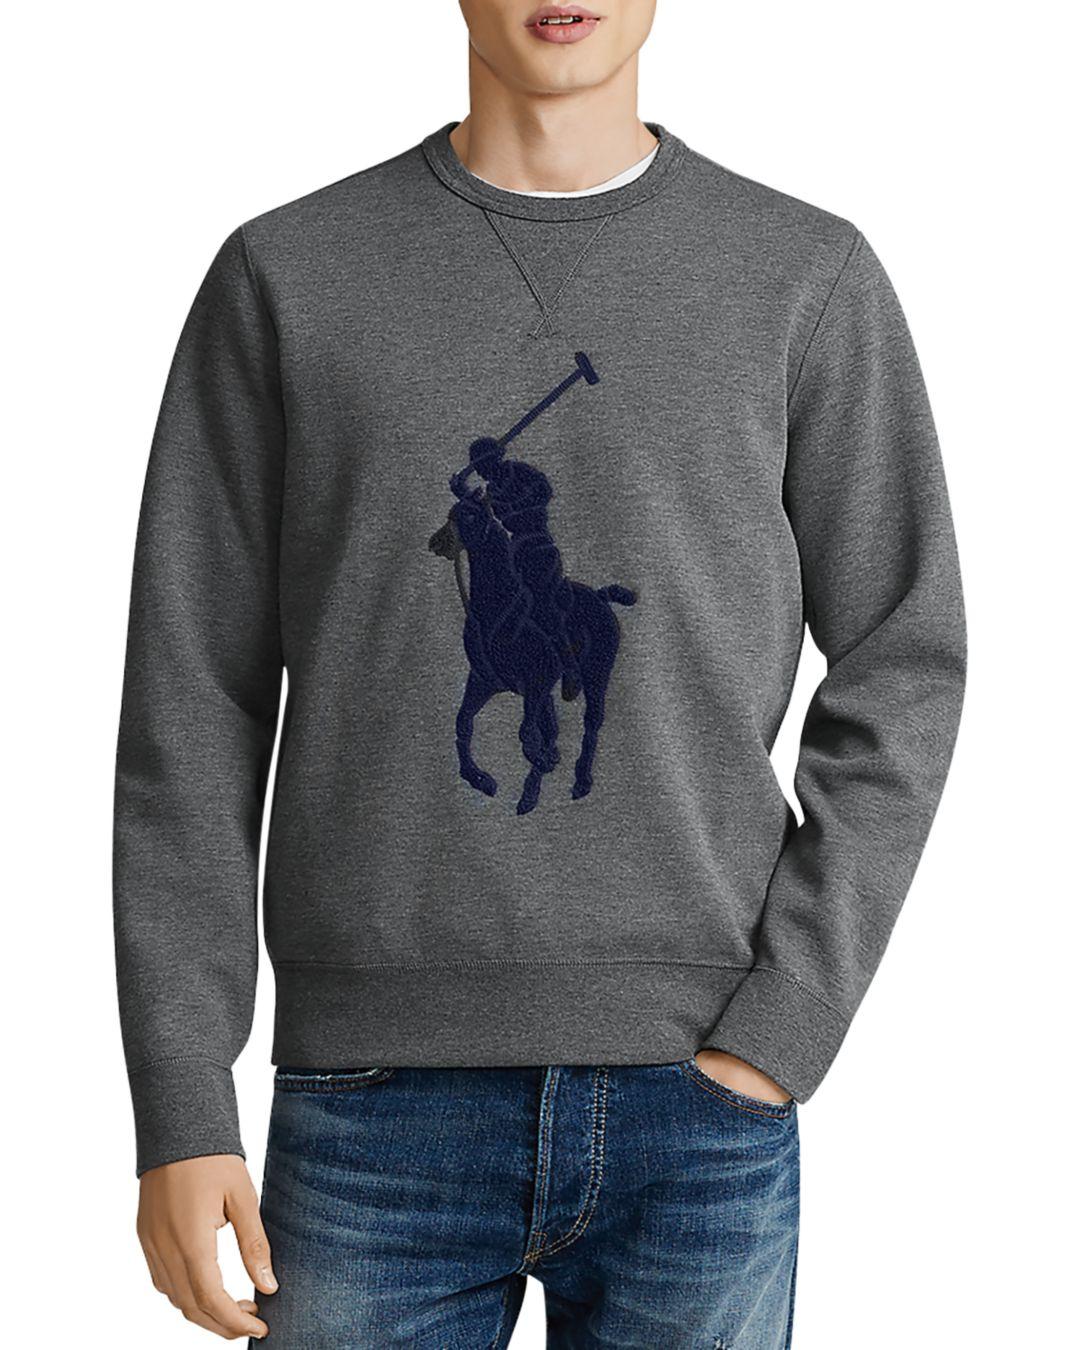 Polo Ralph Lauren Synthetic Big Pony Sweatshirt in Charcoal Heather (Gray)  for Men - Lyst